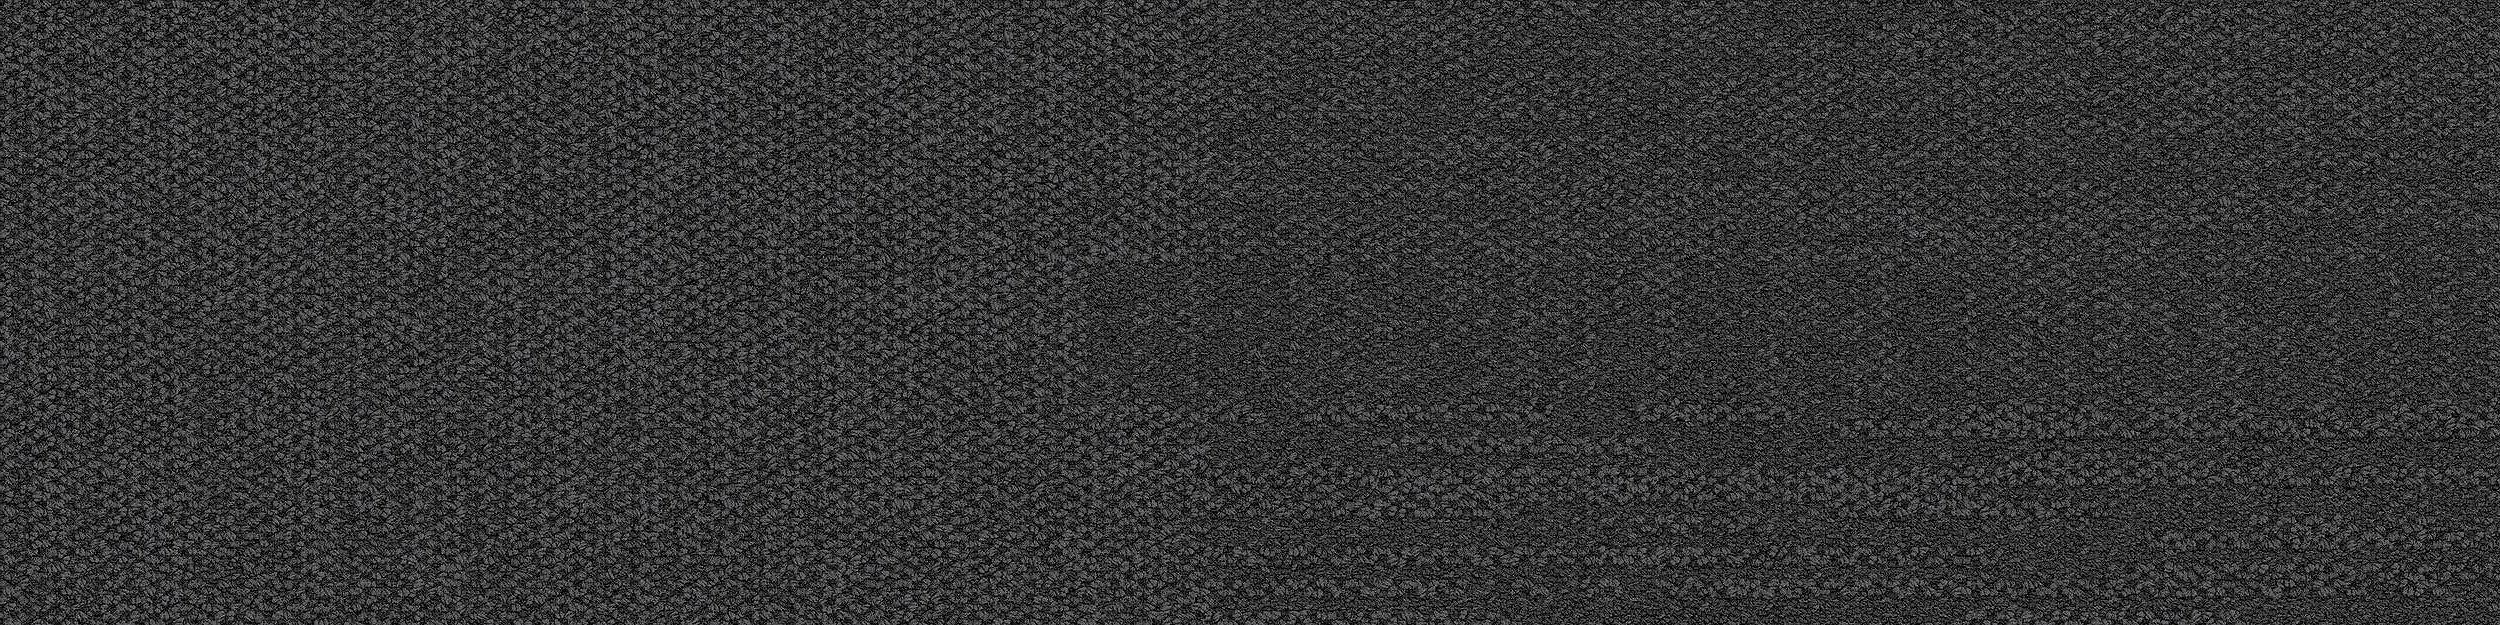 Verticals Carpet Tile In Zenith image number 12